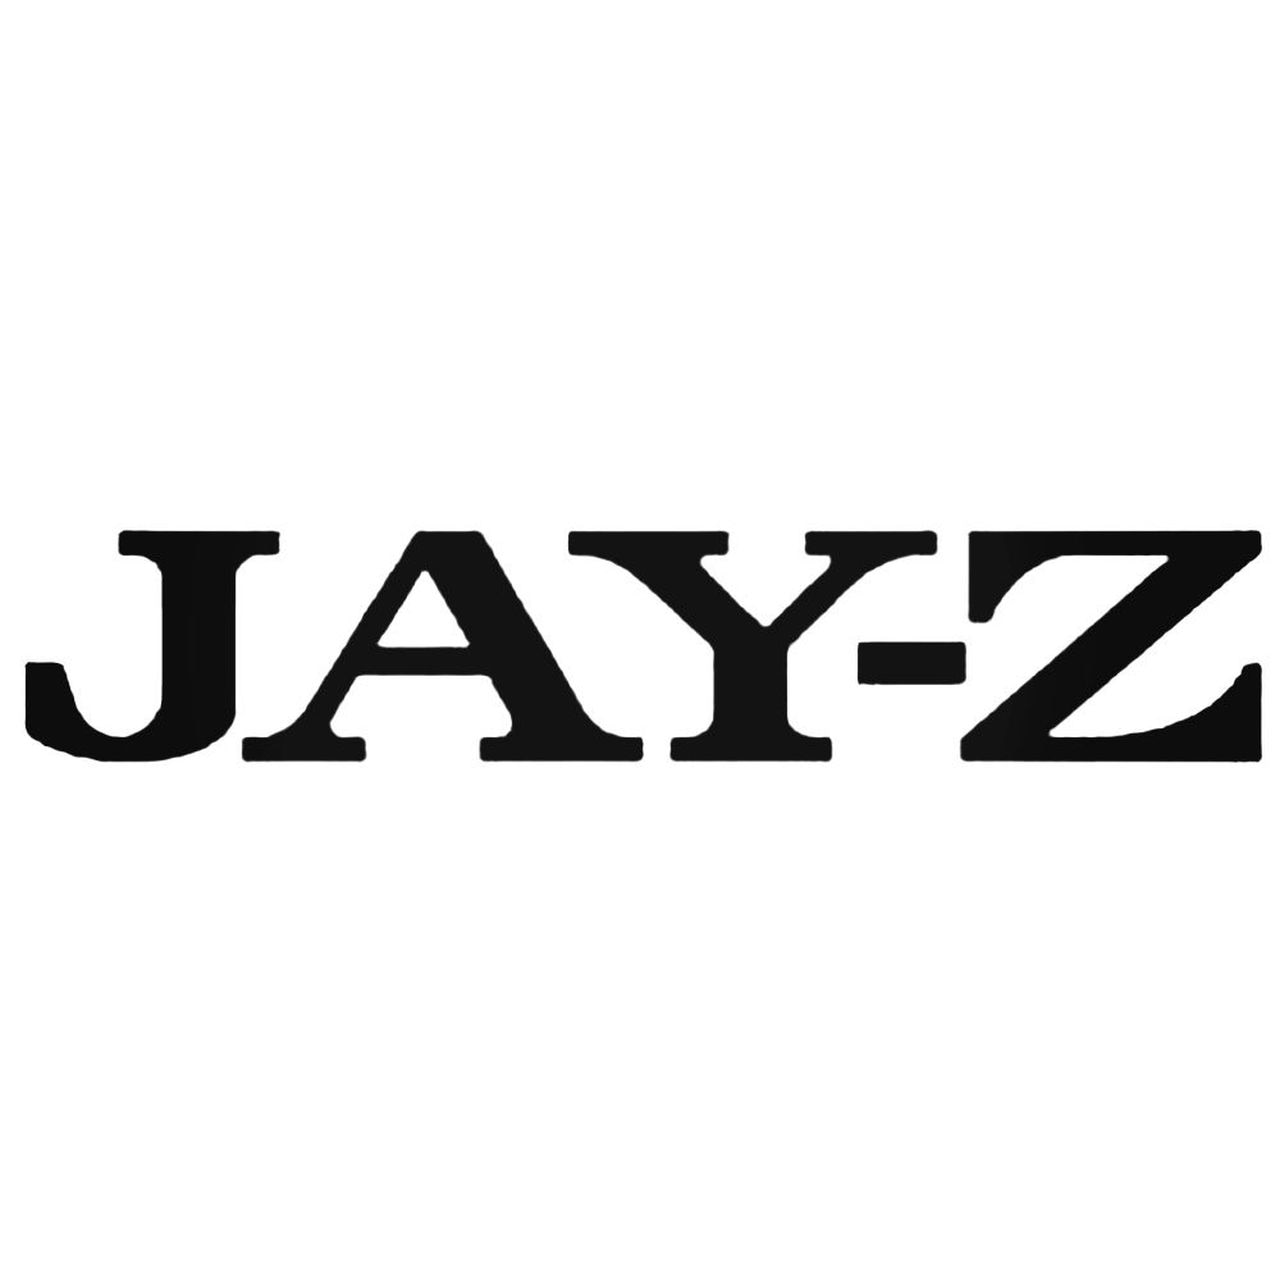 Jay-Z Logo - Jay Z Band Decal Sticker